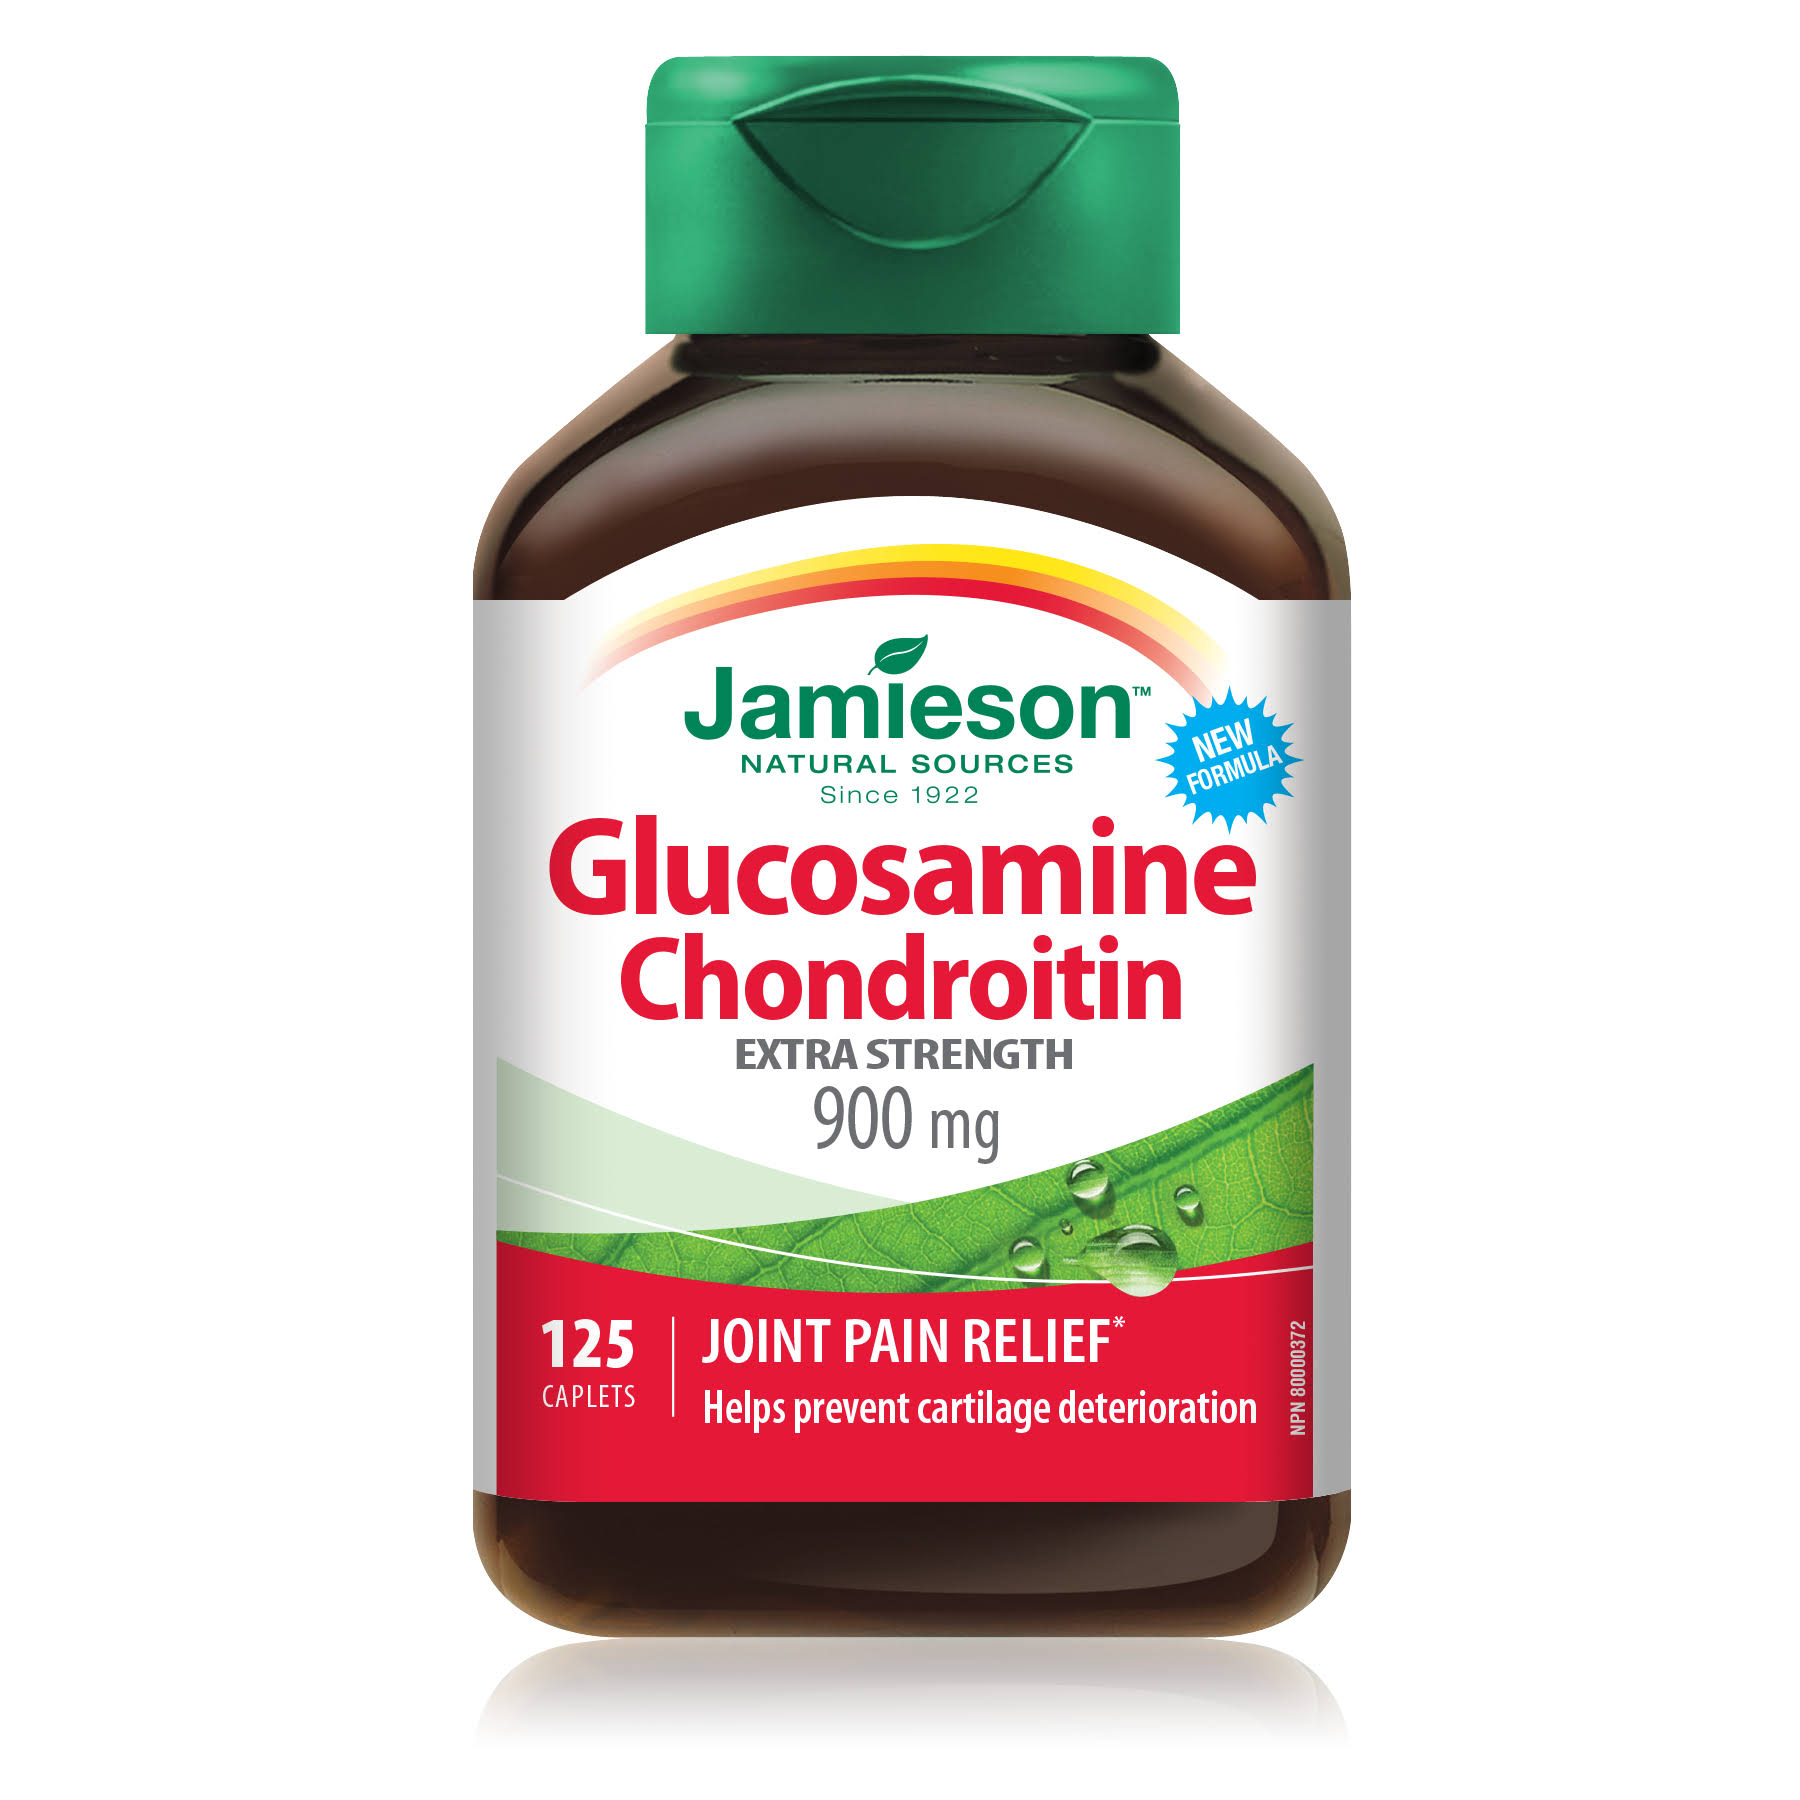 Jamieson Glucosamine & Chondroitin Supplement - 900mg, 125 Caplets